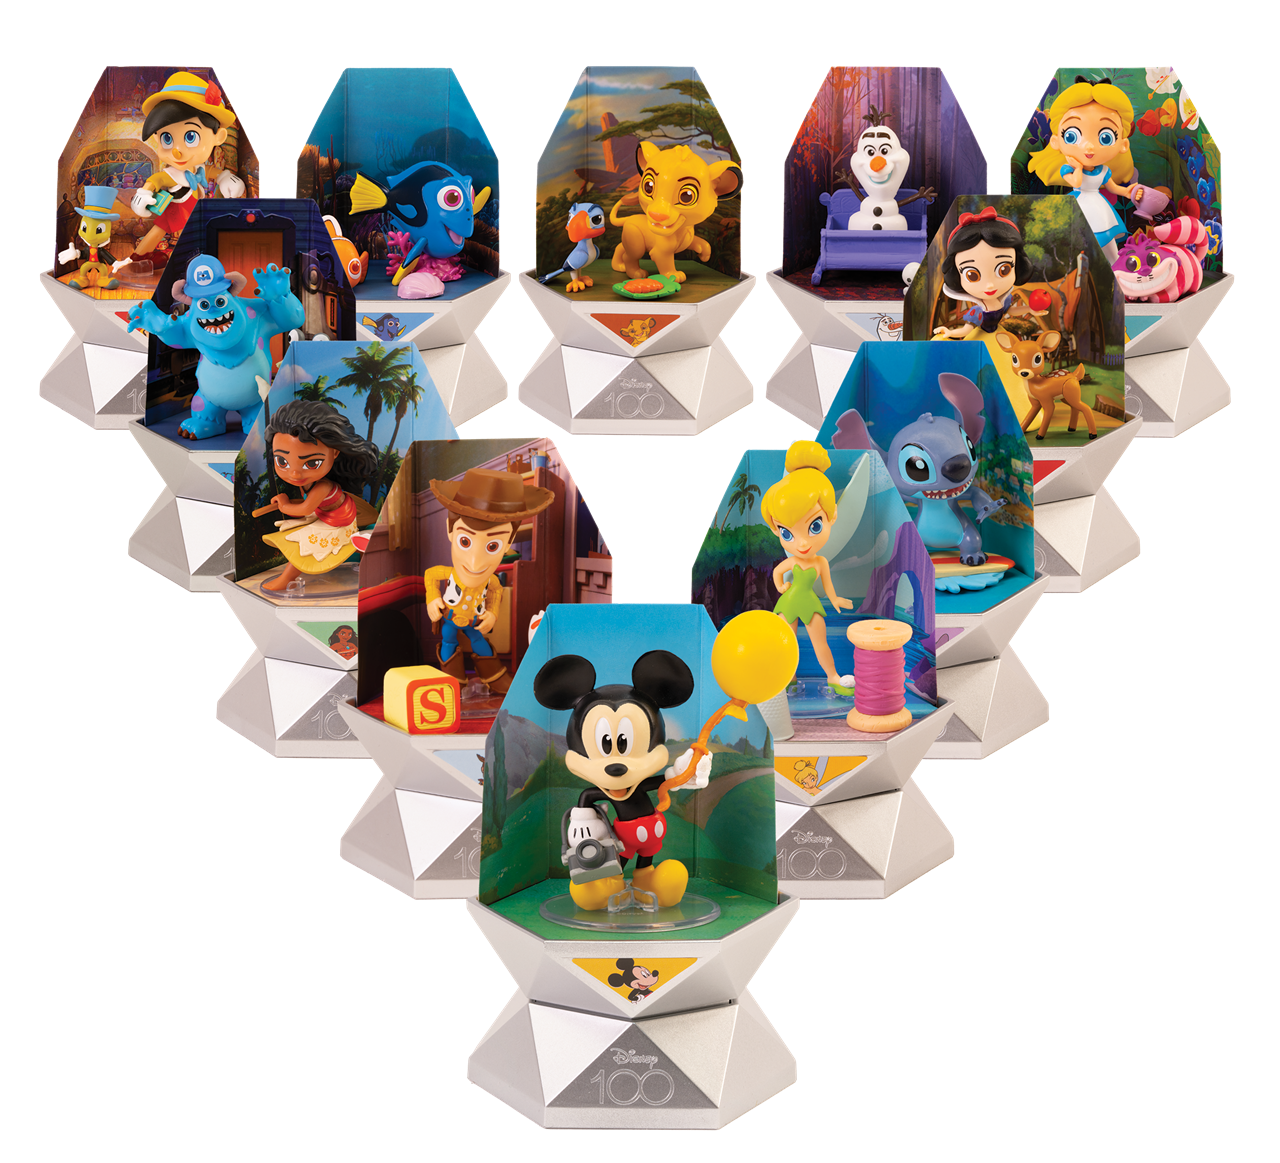 Preorder New Disney WISH Pops at Blue Culture Tees! 🌟 - Blue Culture Tees